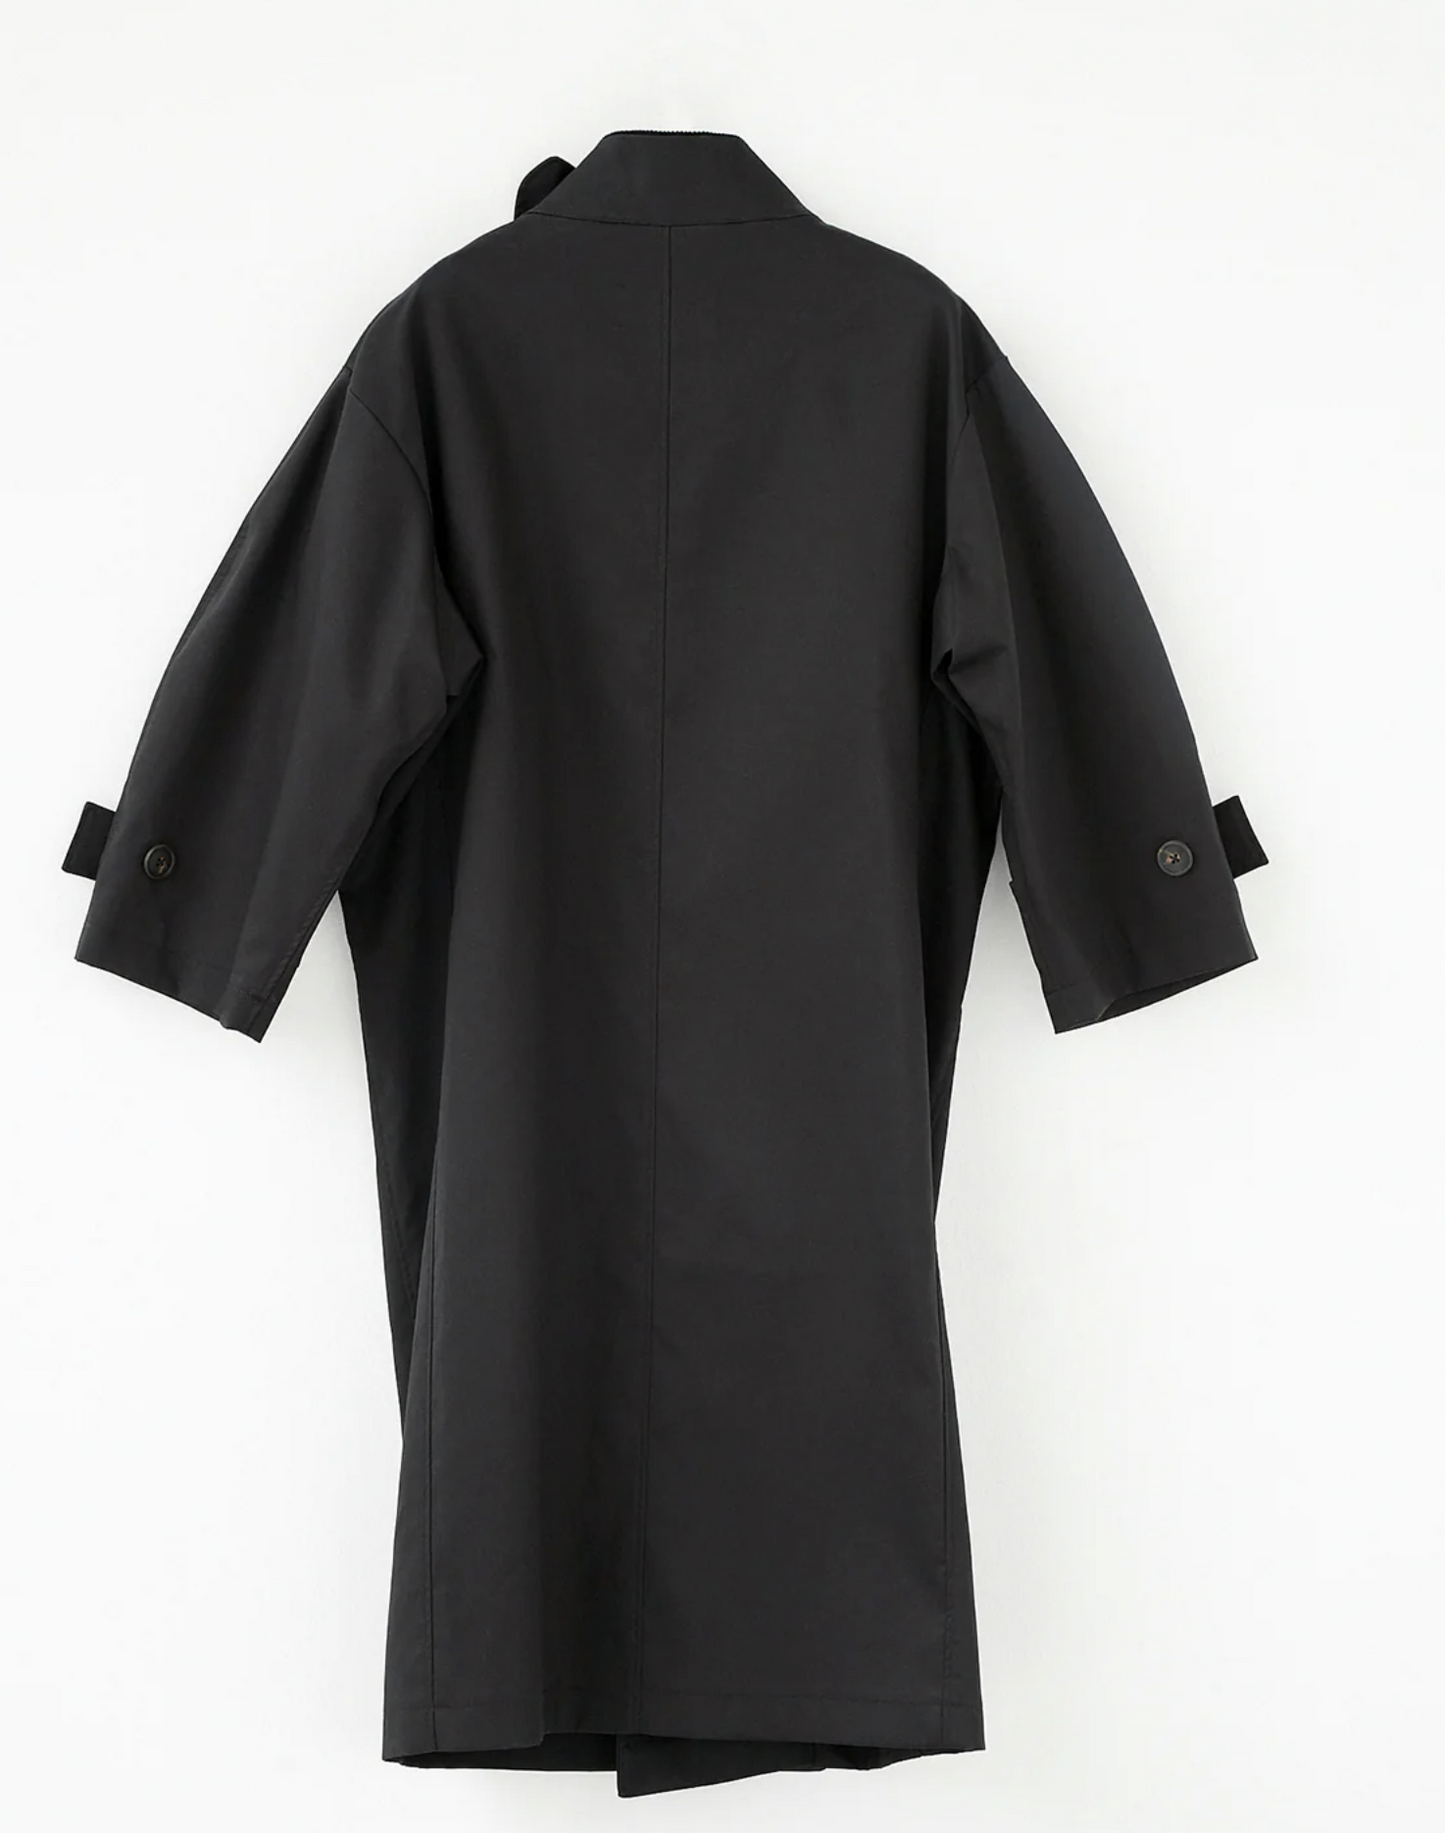 Water resistant coat black size 2